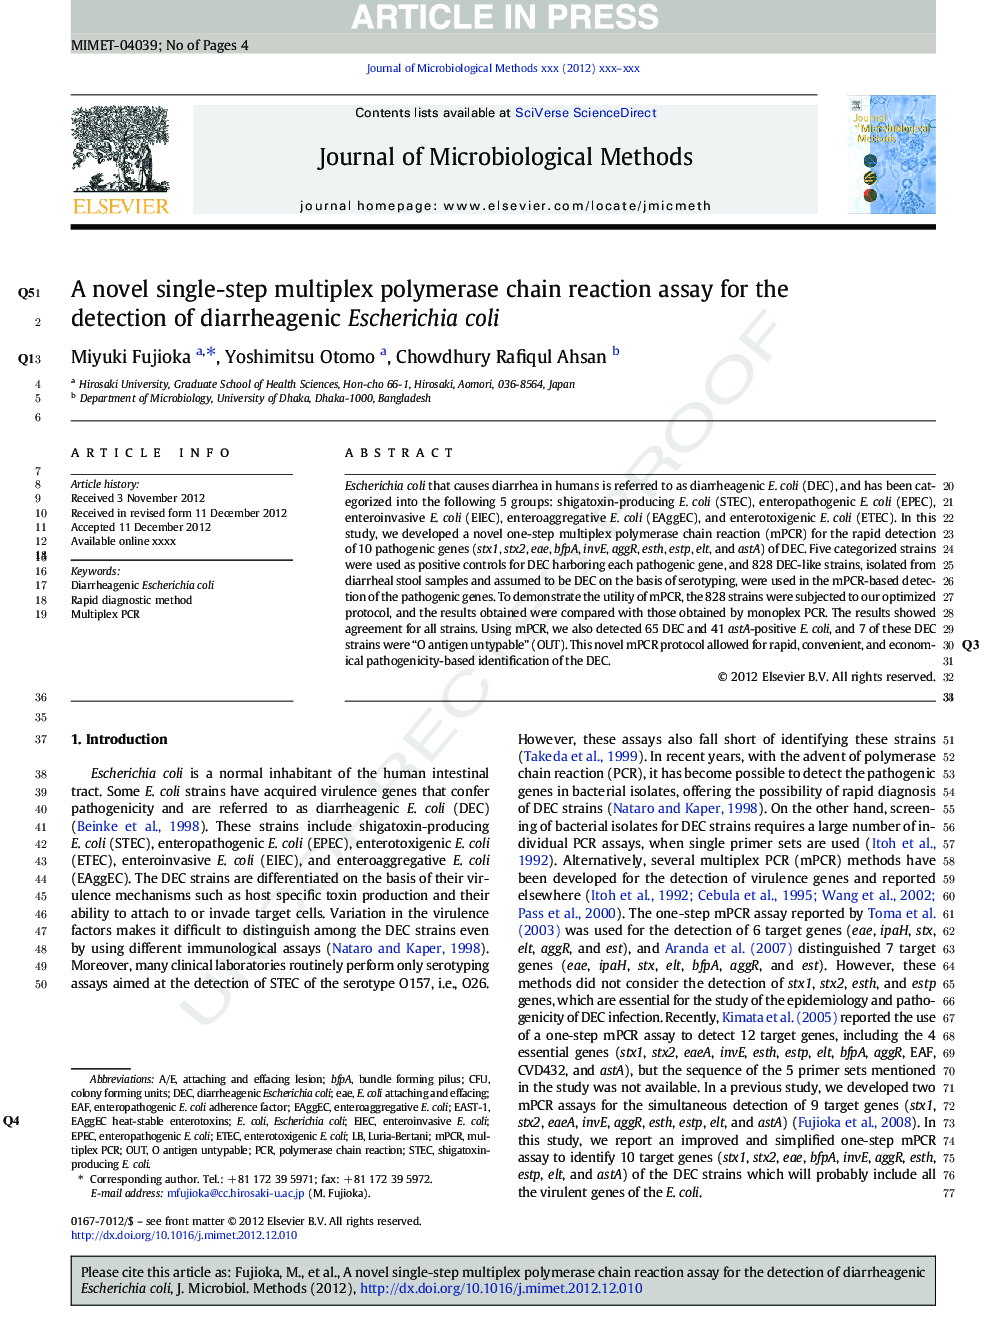 A novel single-step multiplex polymerase chain reaction assay for the detection of diarrheagenic Escherichia coli